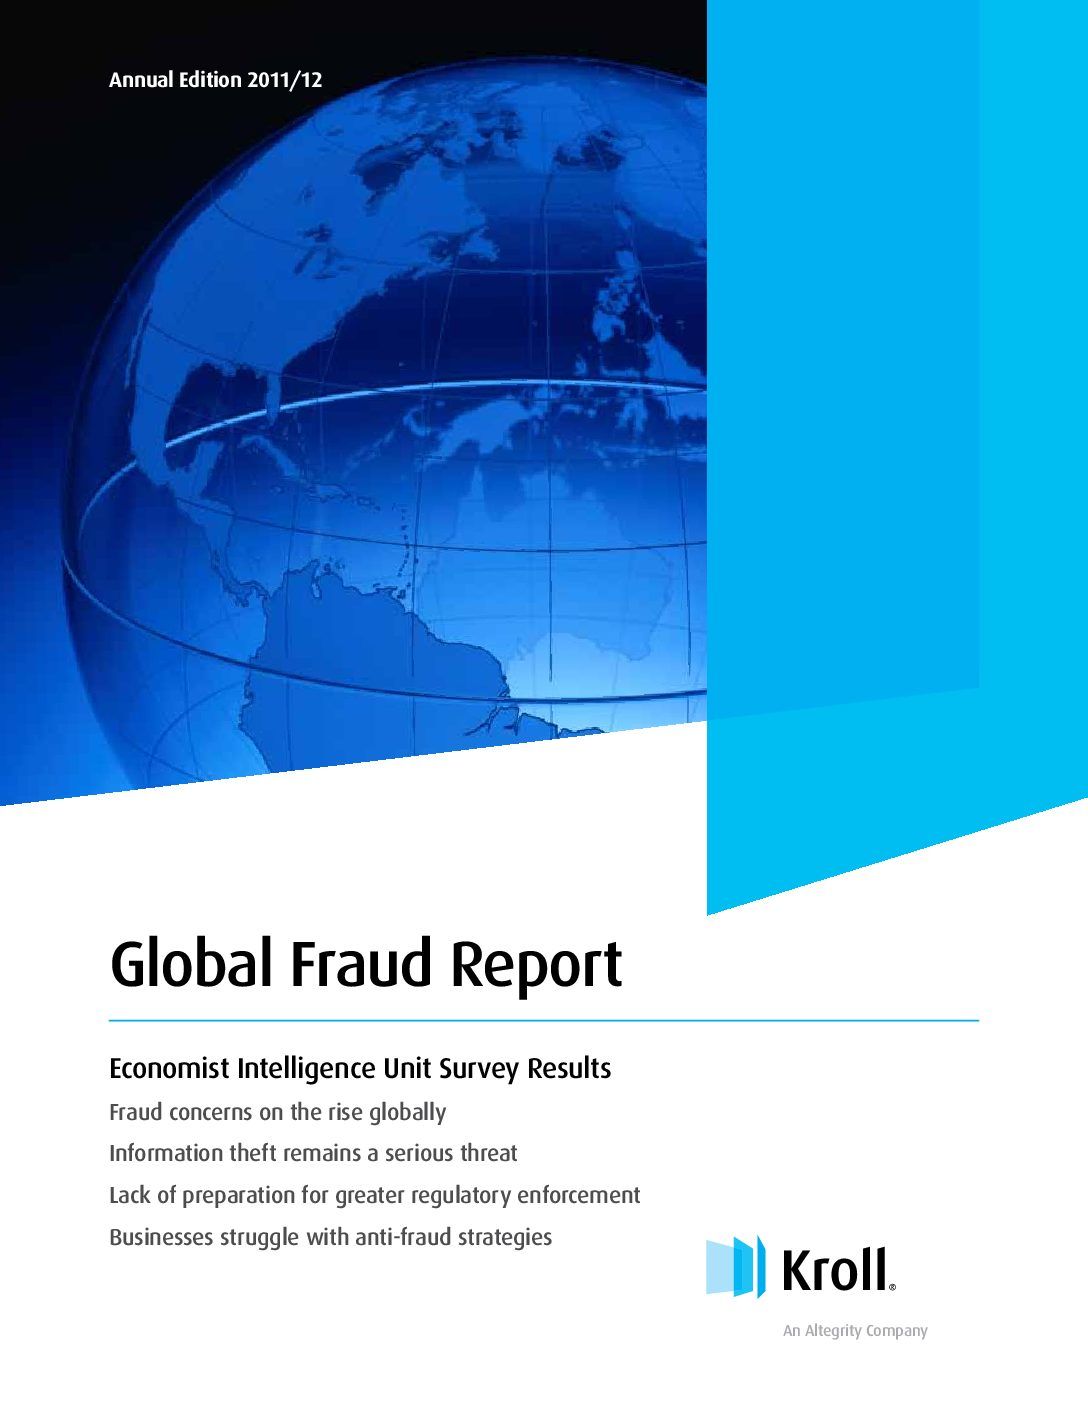 Kroll - Global Fraud Report - 2011-2012